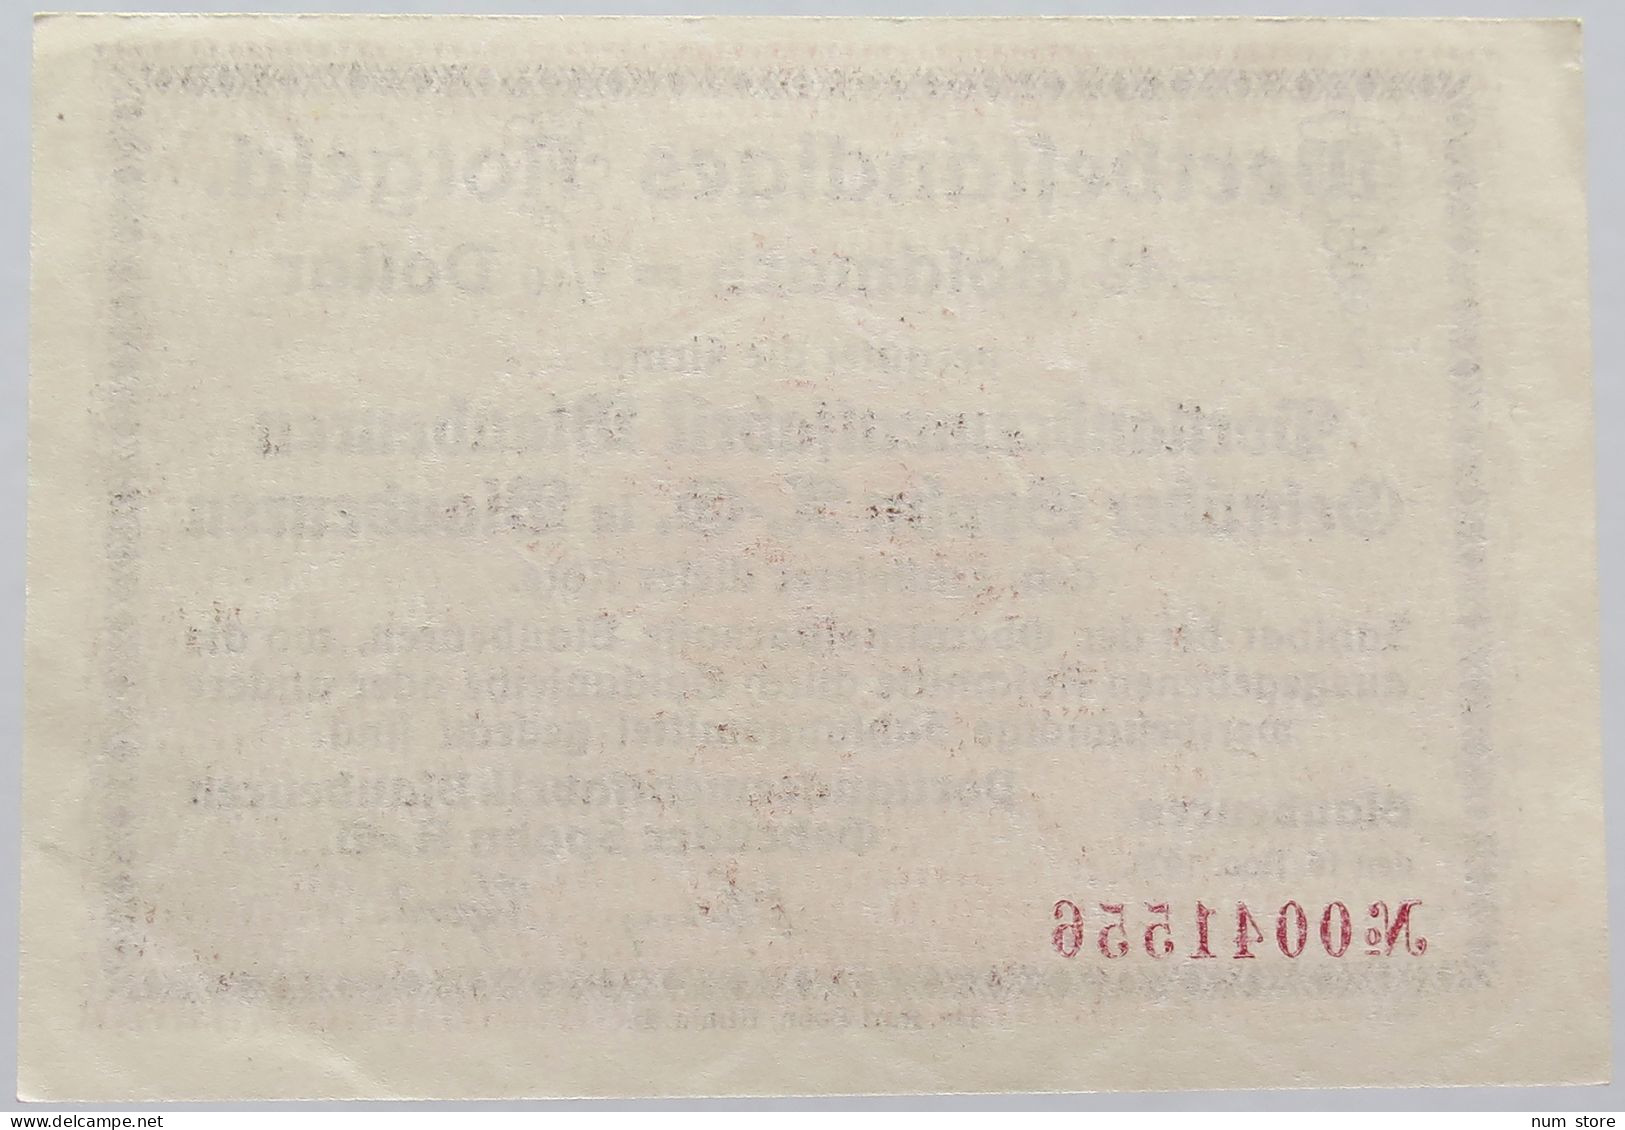 GERMANY 0.42 GOLDMARK 1/10 DOLLAR 1923 BLAUBEUREN #alb002 0237 - Deutsche Golddiskontbank